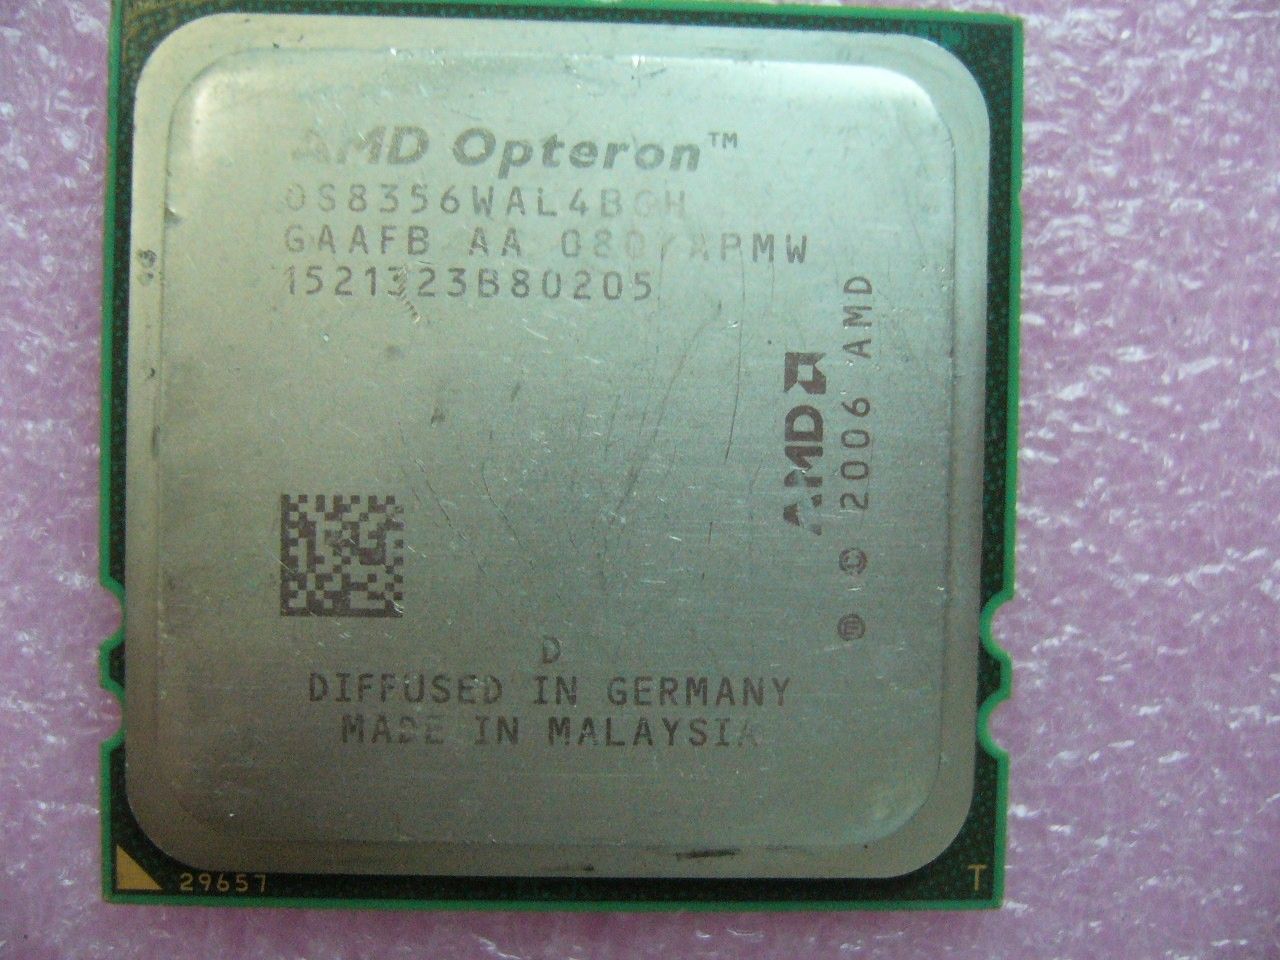 QTY 1x AMD OS8356WAL4BGH Quad CORE OPTERON 8356 Socket F 1207